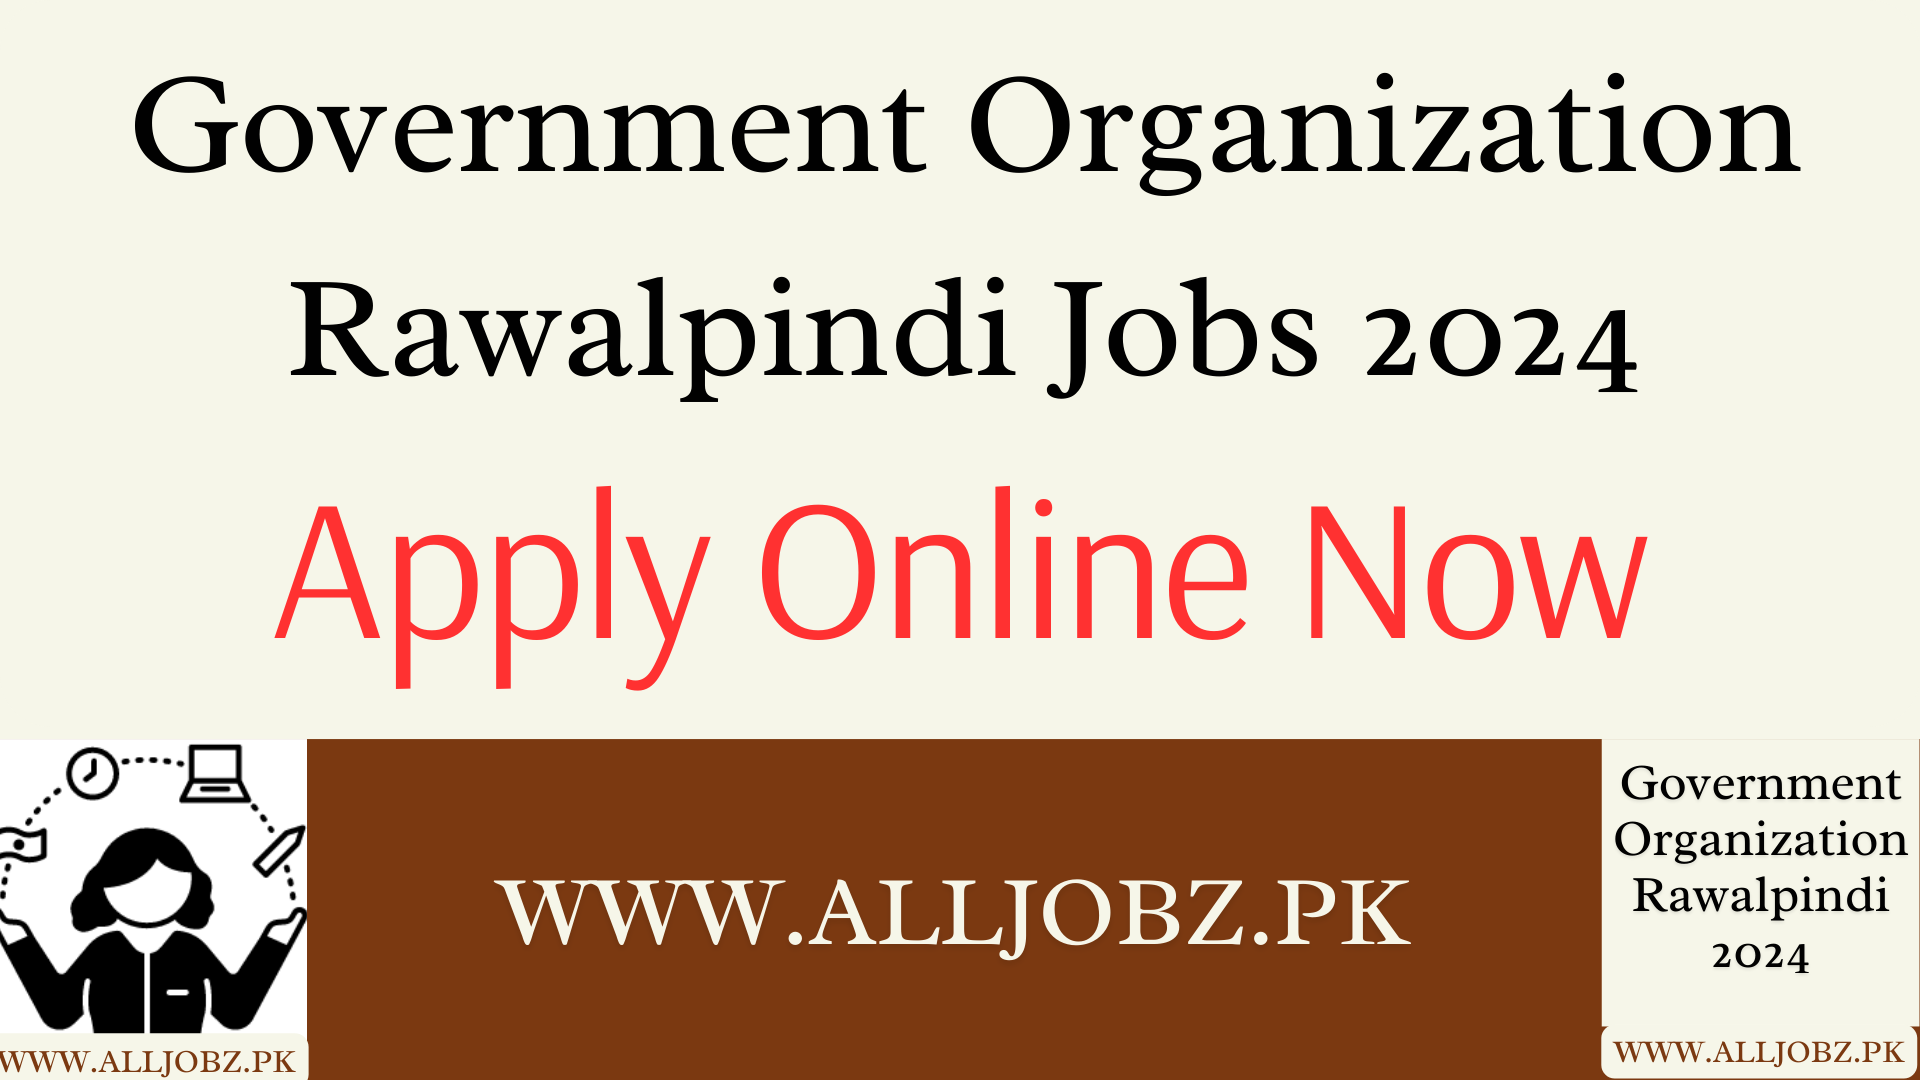 Government Organization Rawalpindi Jobs 2024, Government Organization Rawalpindi Jobs 2024 Apply Online,